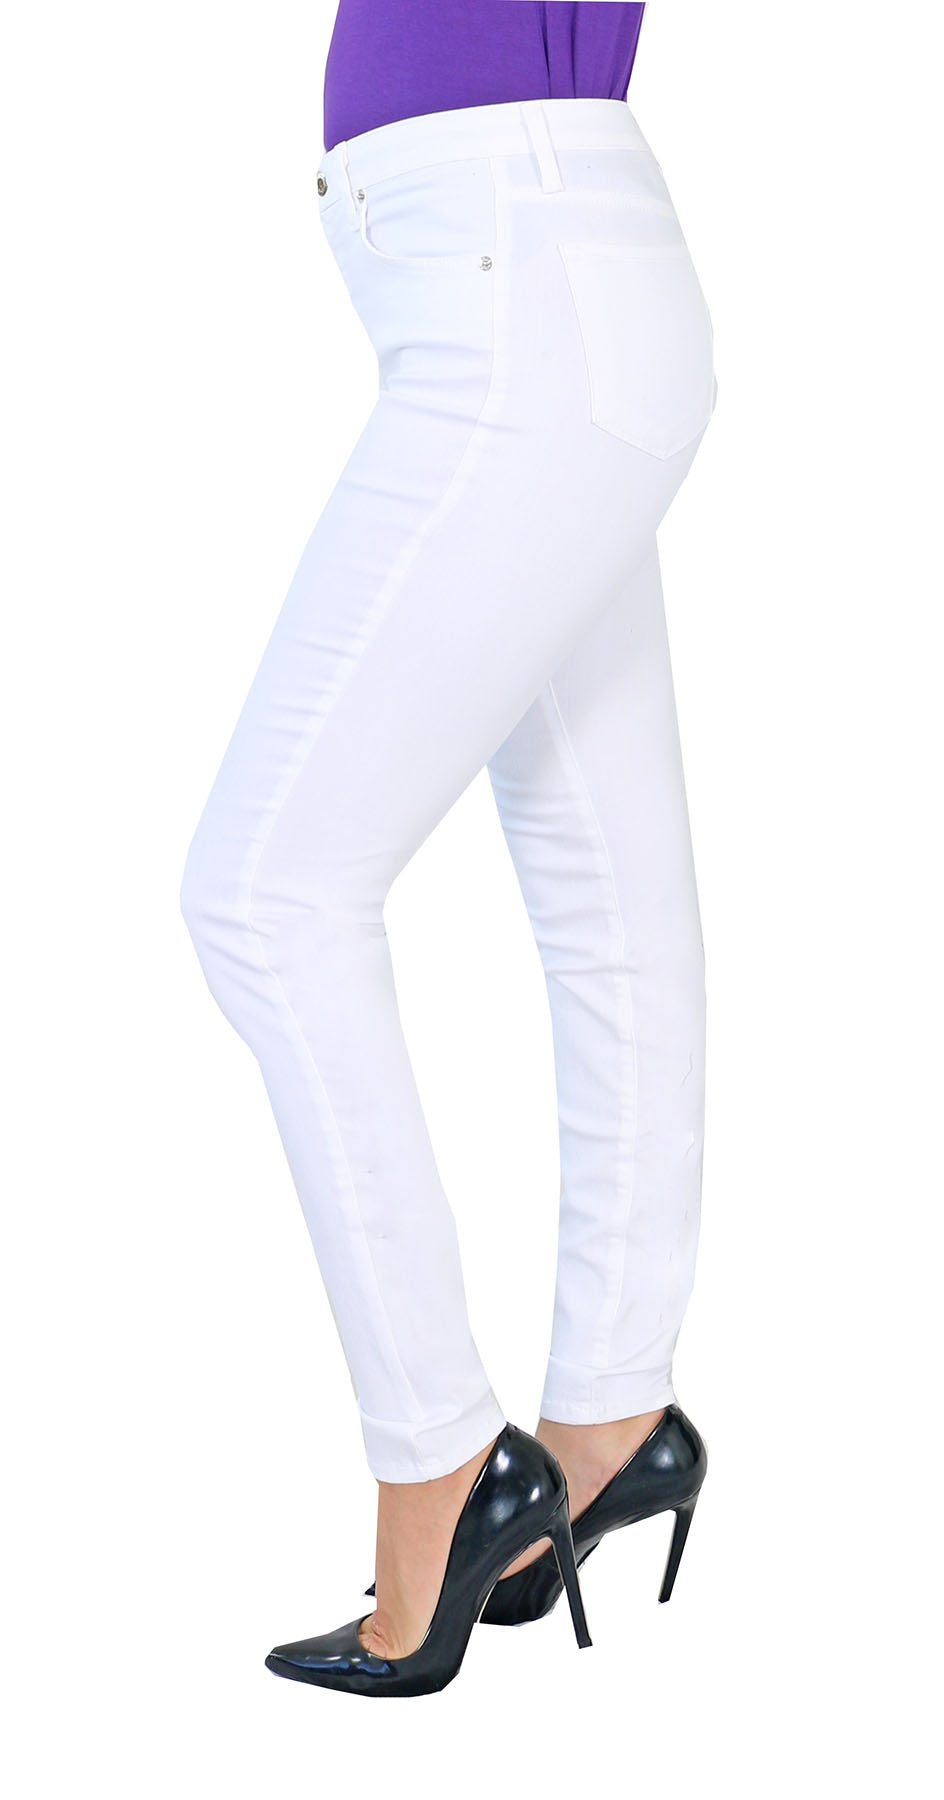 TrueSlim™ White Jeans